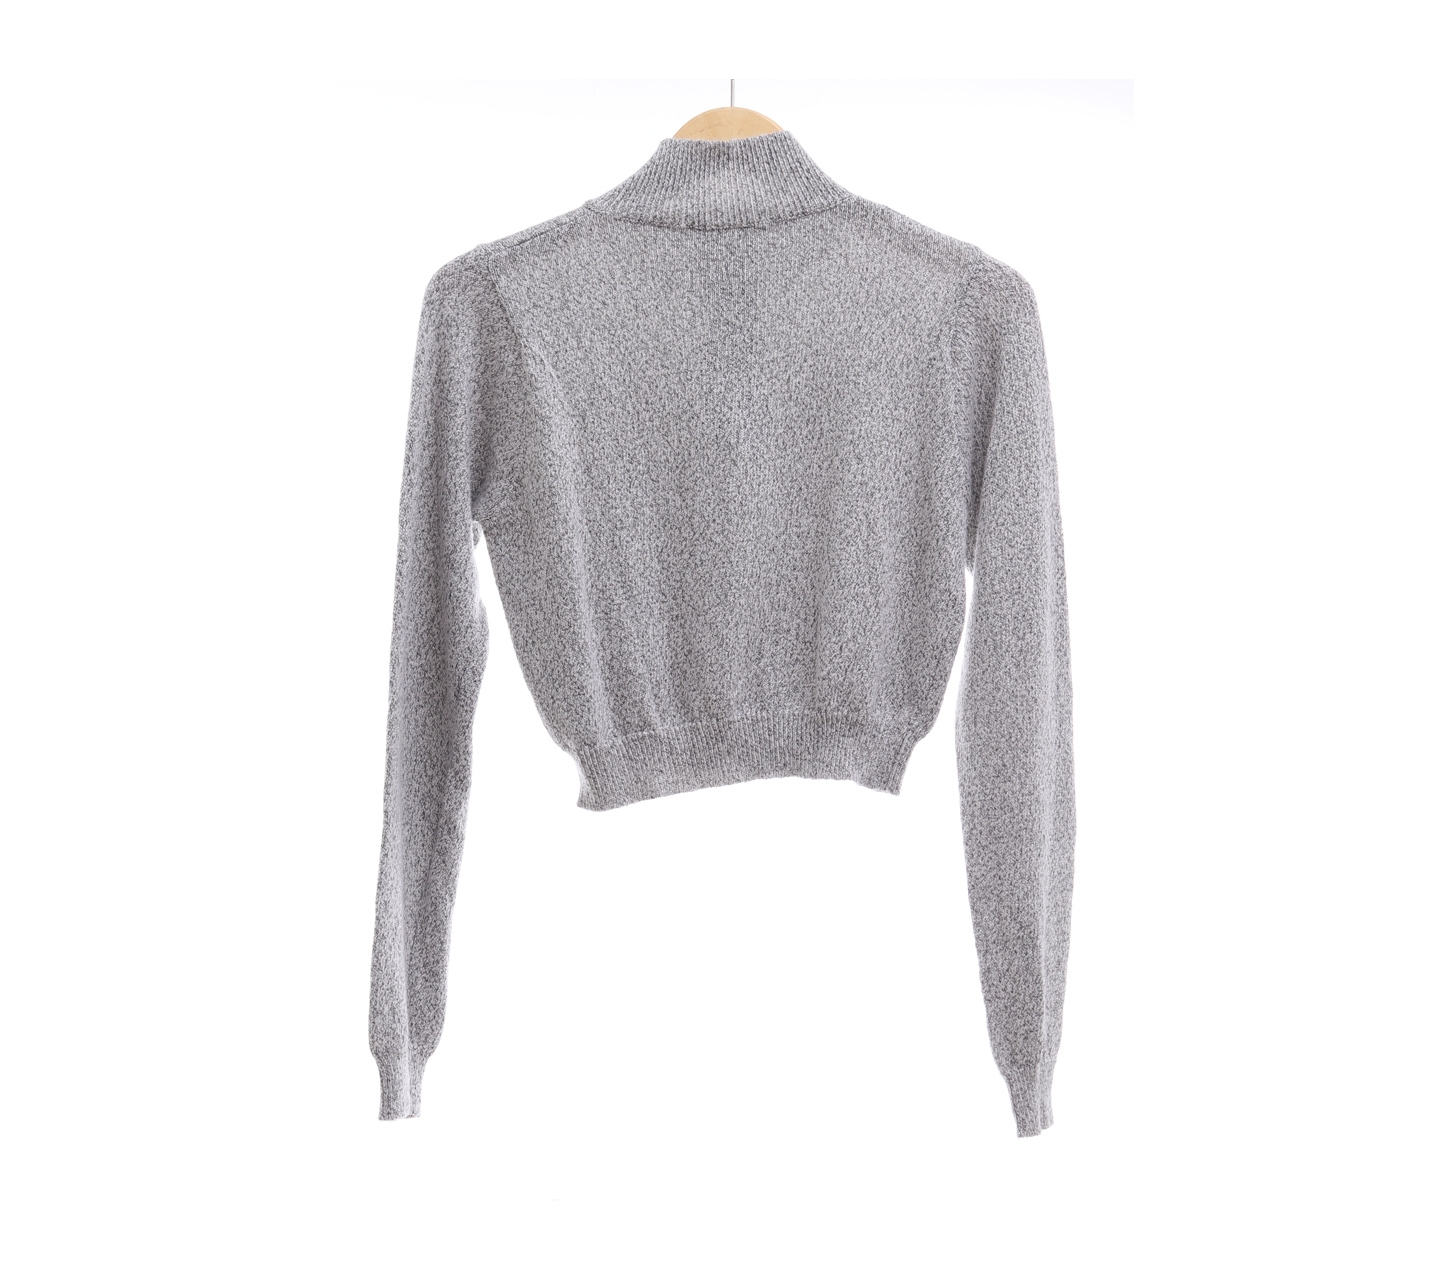 Brandy Melville Light Grey Sweater